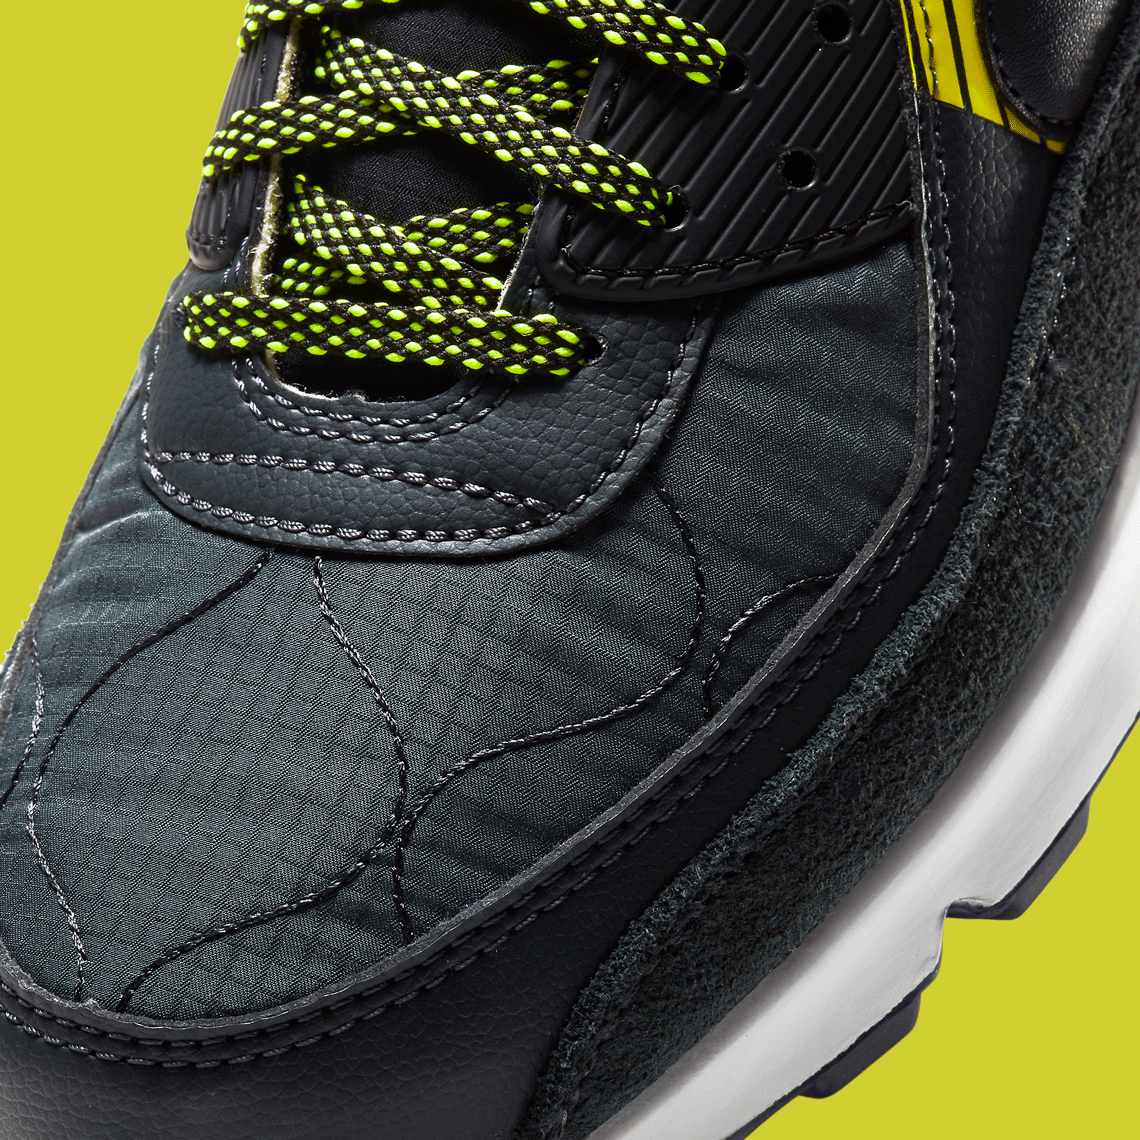 3M Nike Air Max 90 Winter CZ2975-002 Release Date | SneakerNews.com